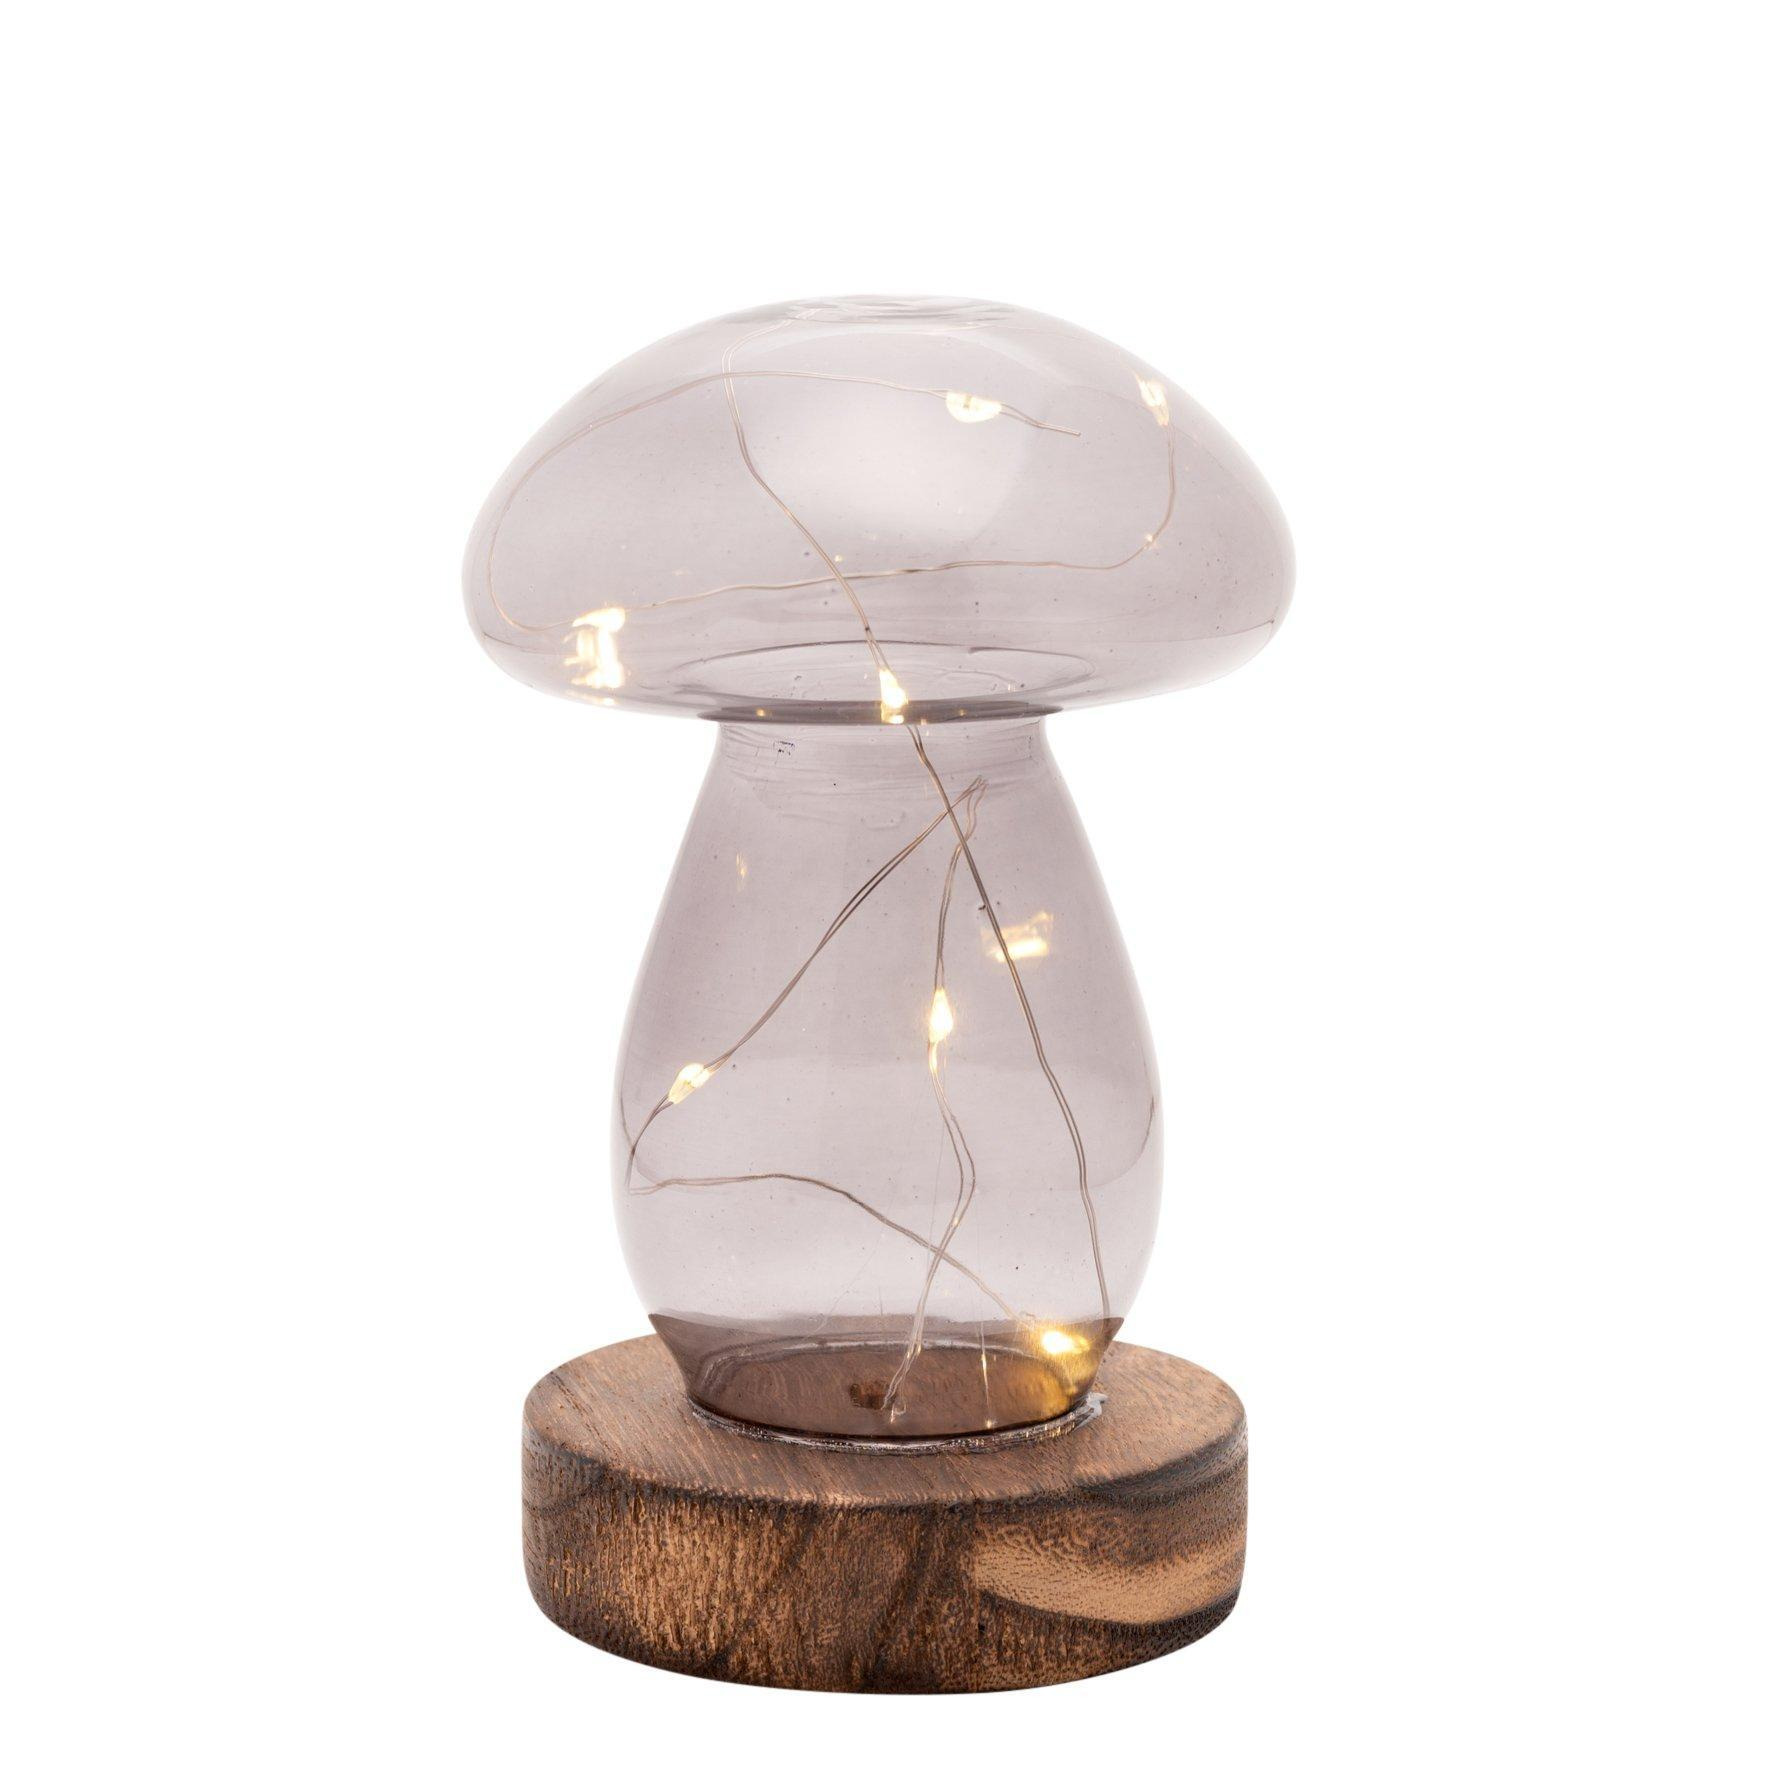 Grey Glass Mushroom with LED Lights Medium - image 1